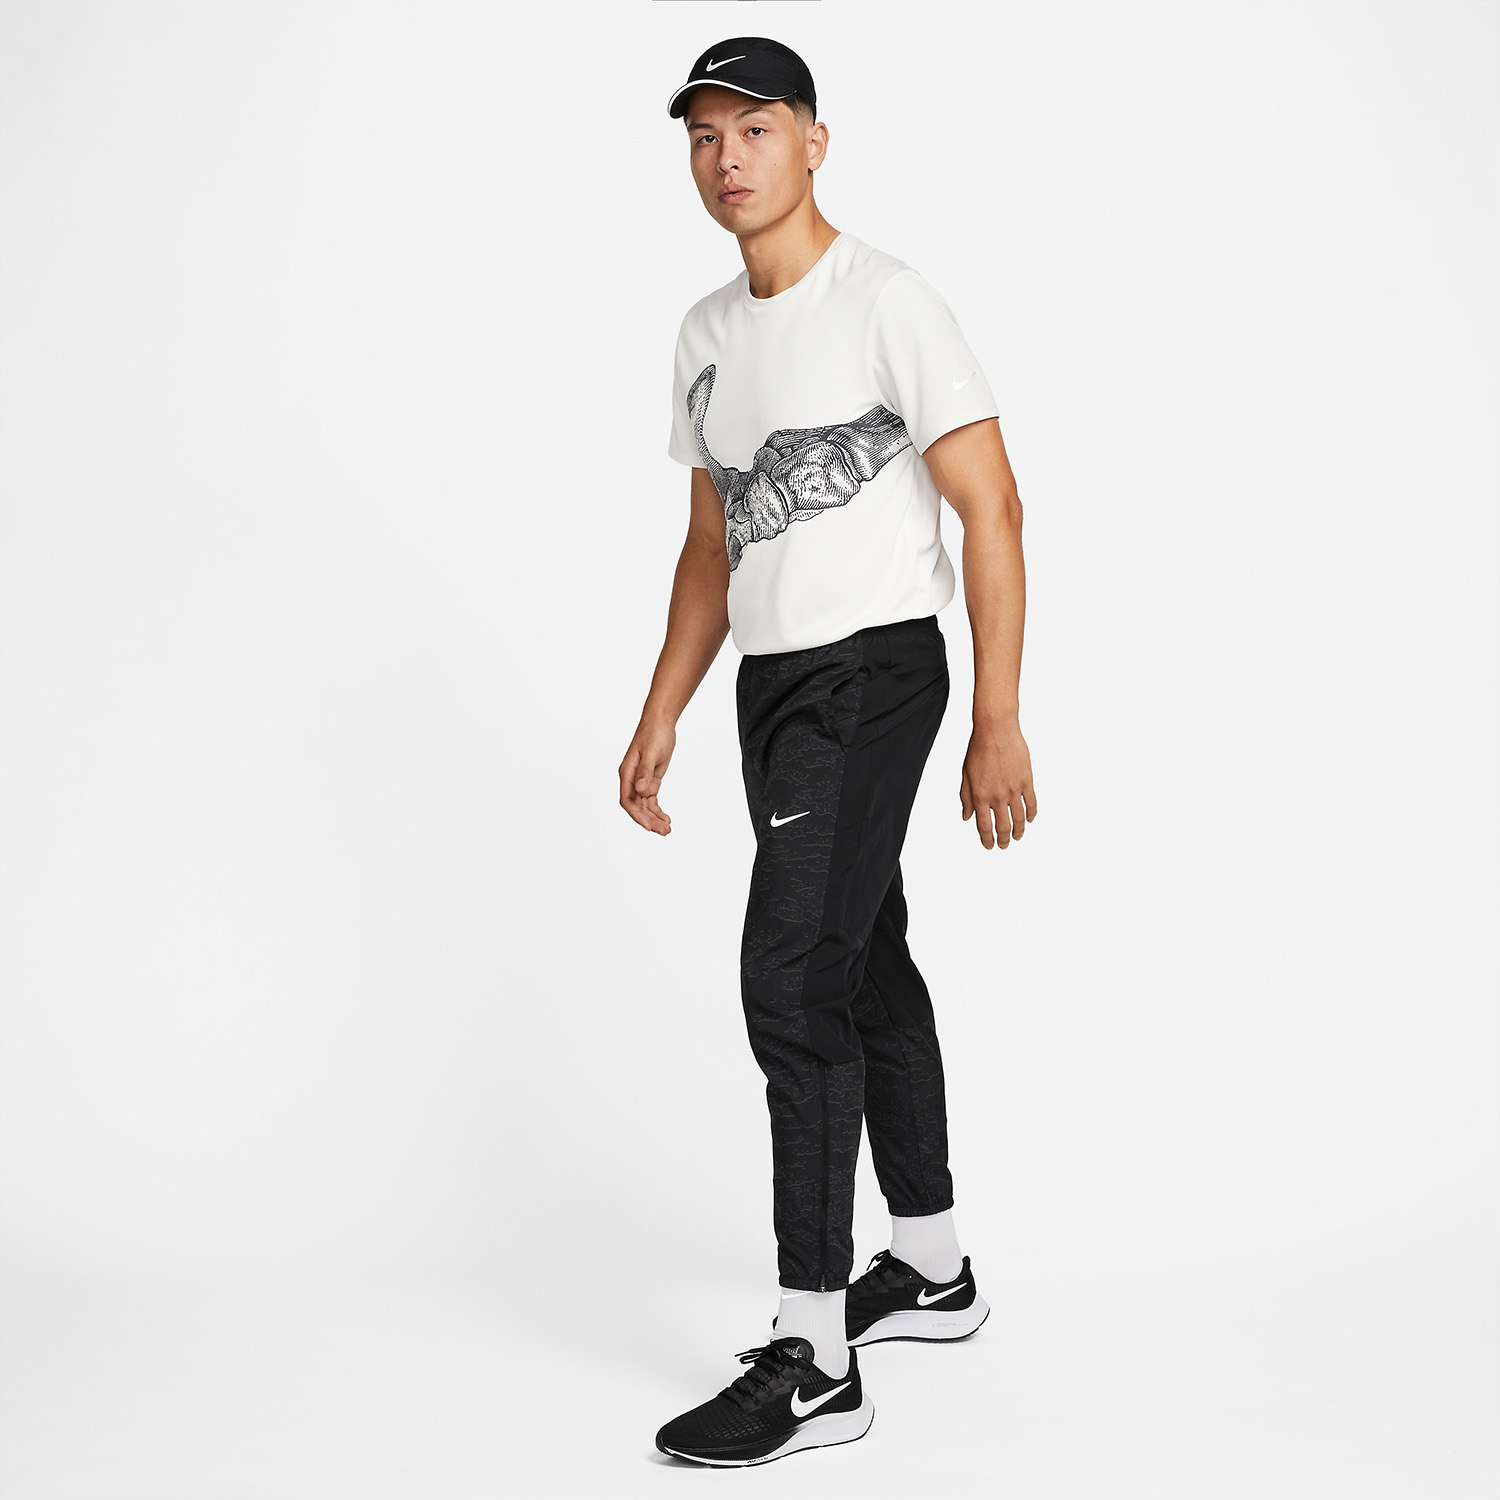 Nike Dri-FIT Swoosh Men's Running Pants - Black